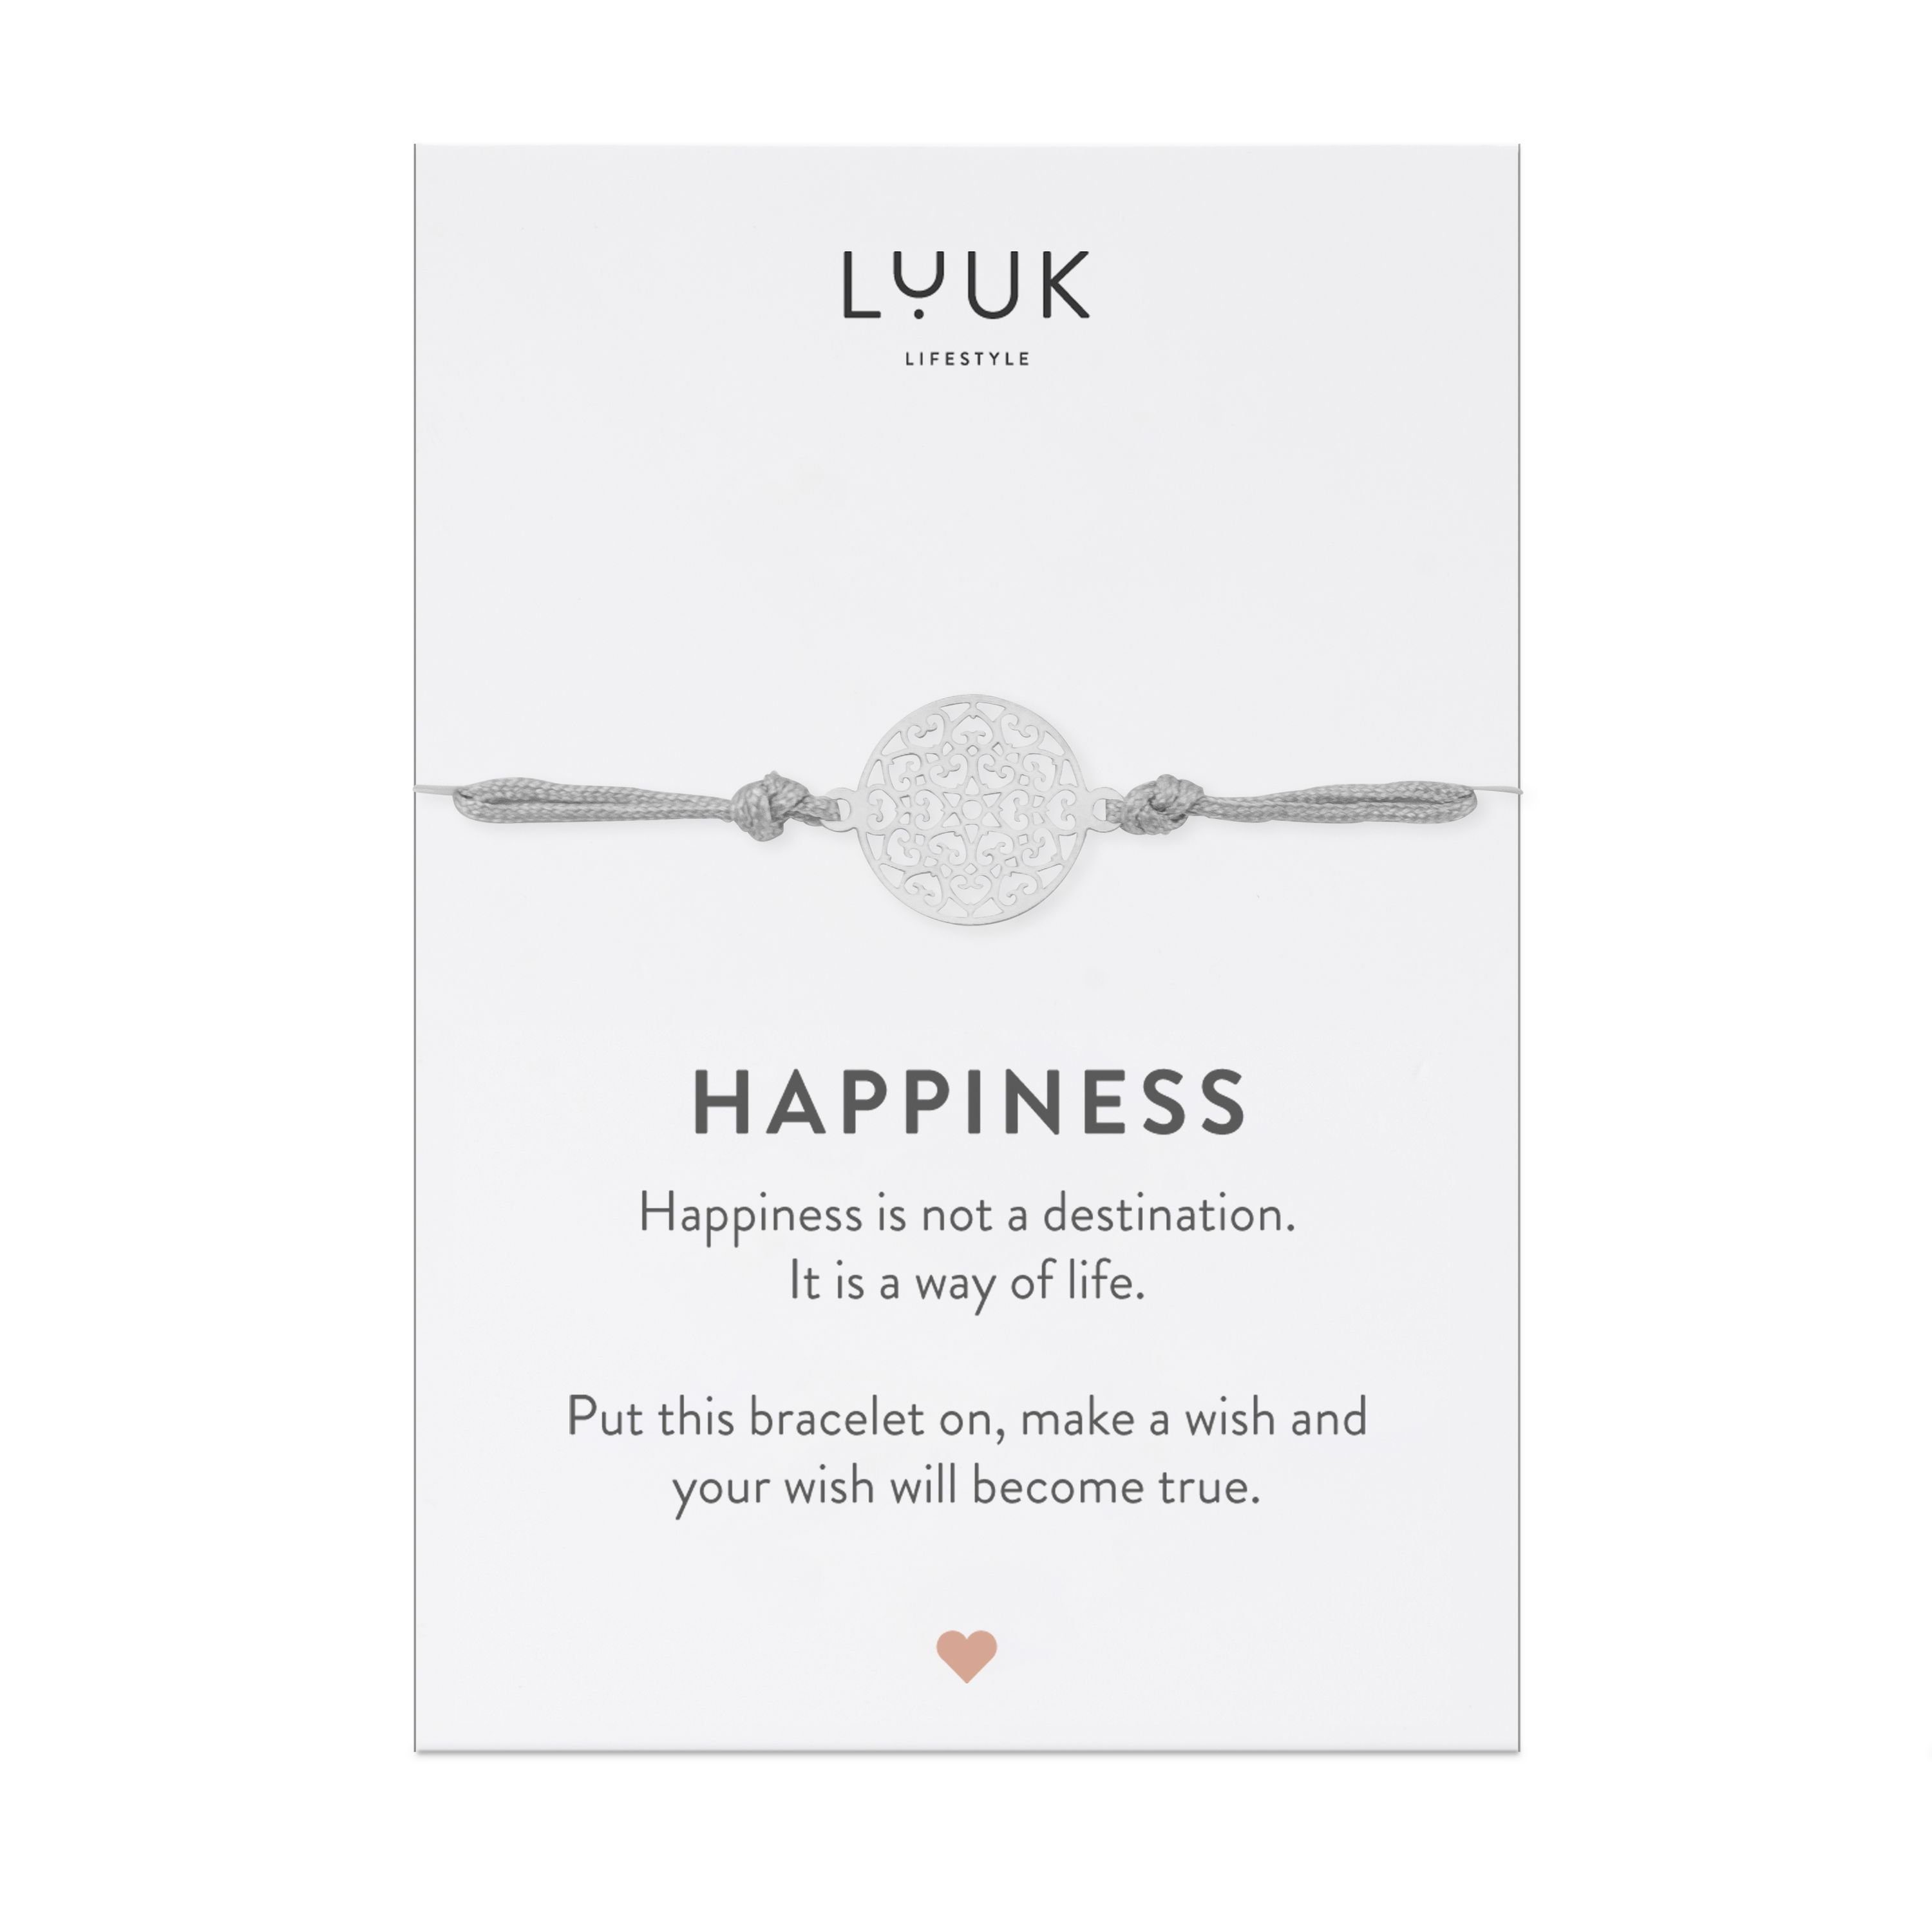 LUUK LIFESTYLE Freundschaftsarmband Lebensblume, handmade, mit Happiness Spruchkarte Silber